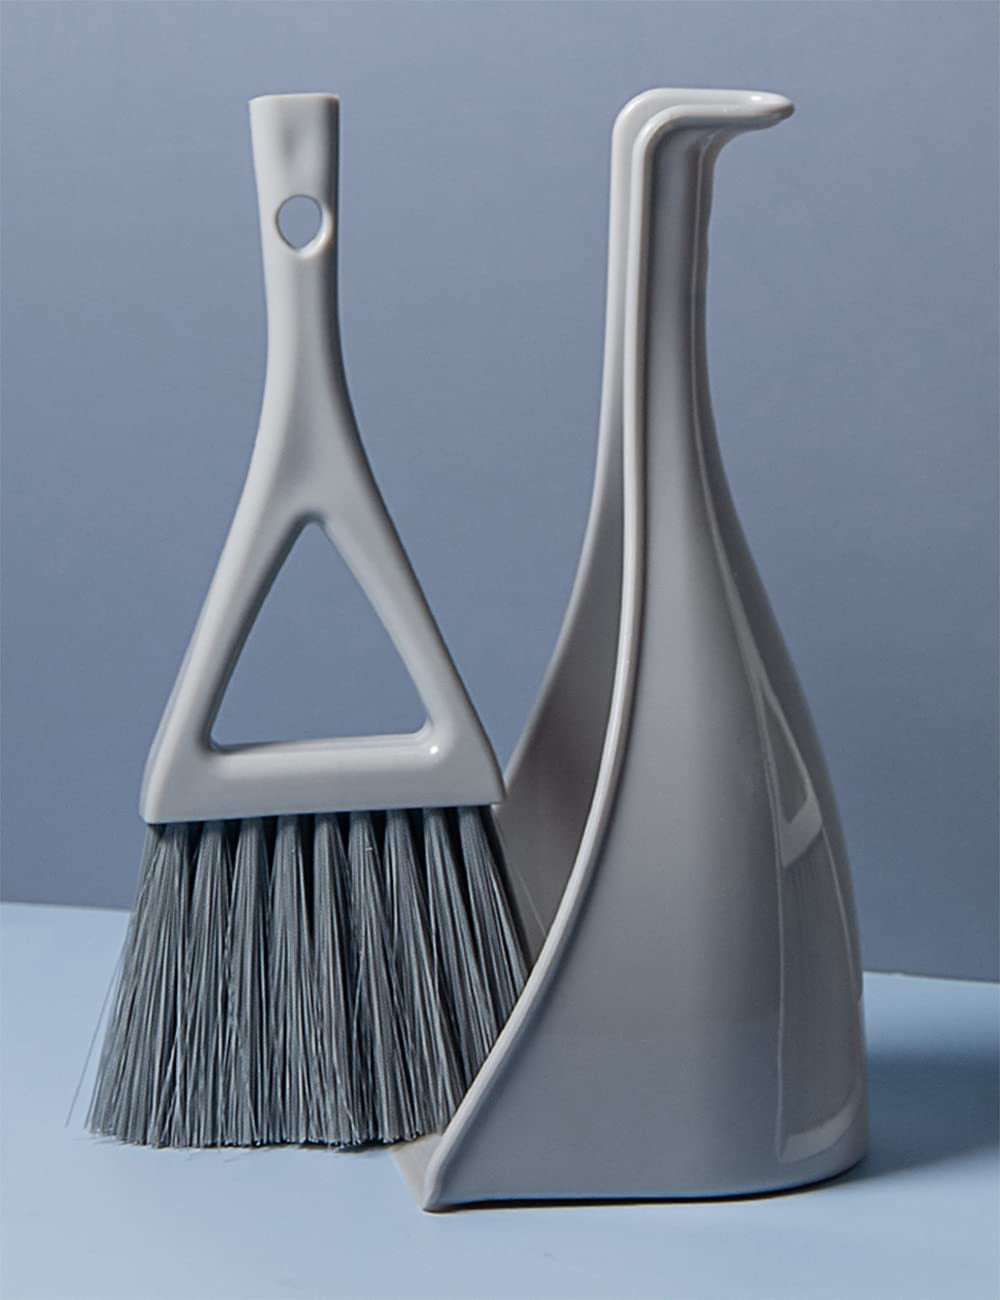 Small Broom and Dustpan Set,Mini Handheld Dust pan with Cleaning Brush –  KeFanta